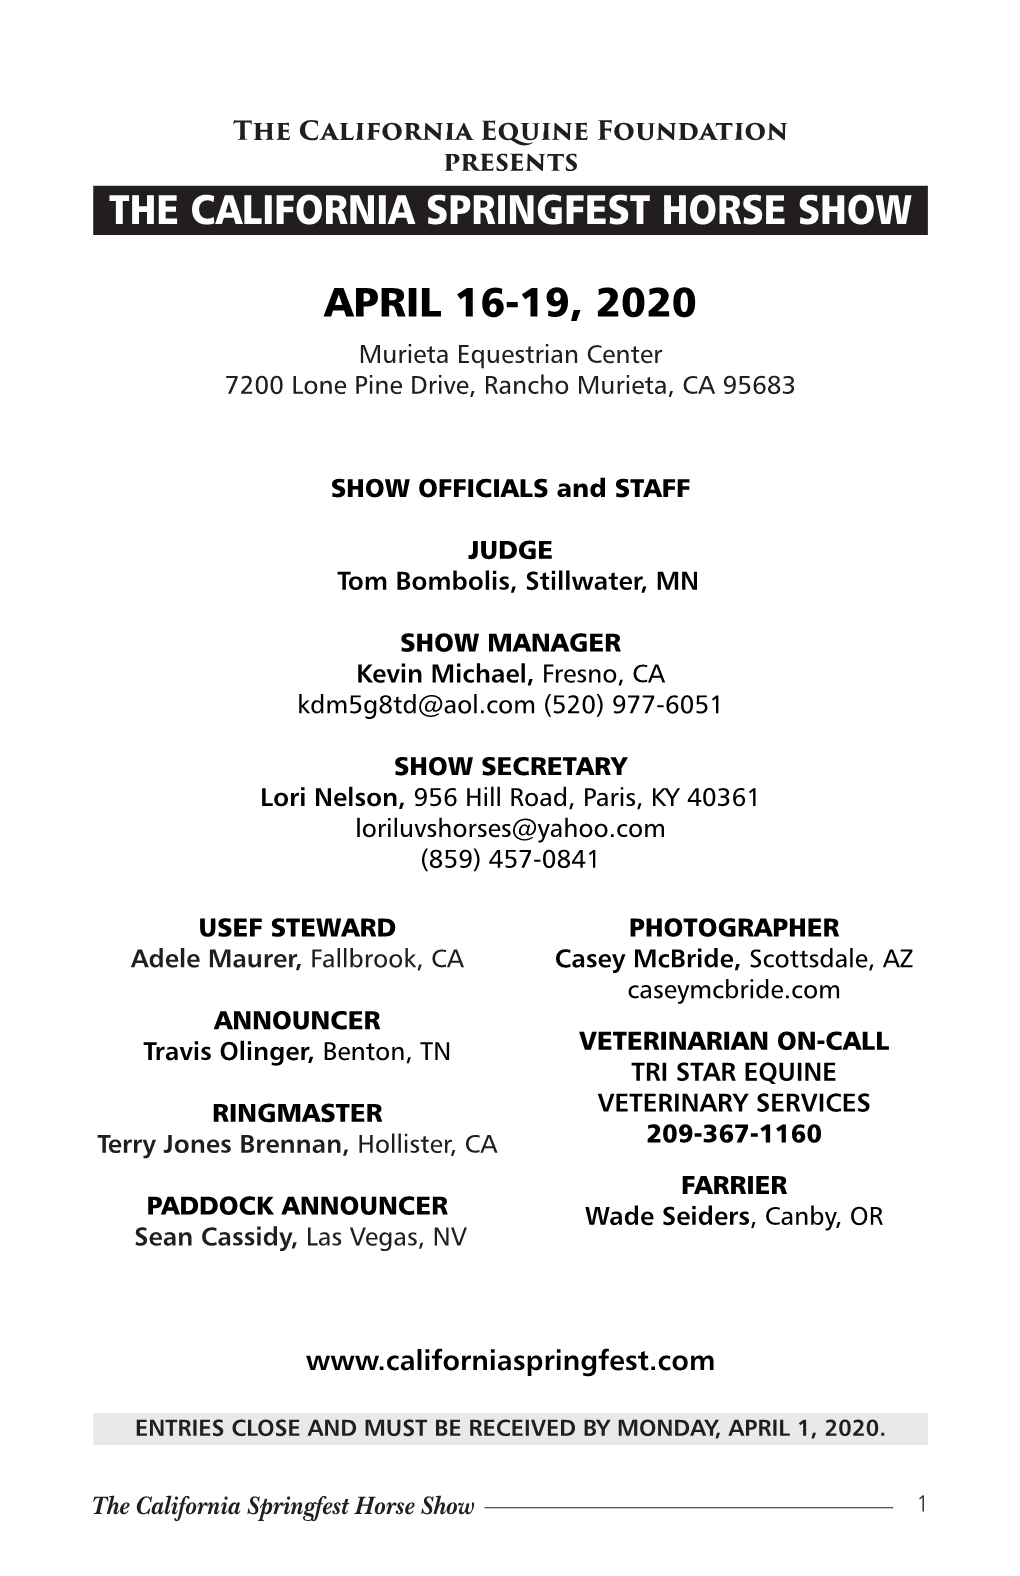 The California Springfest Horse Show April 16-19, 2020